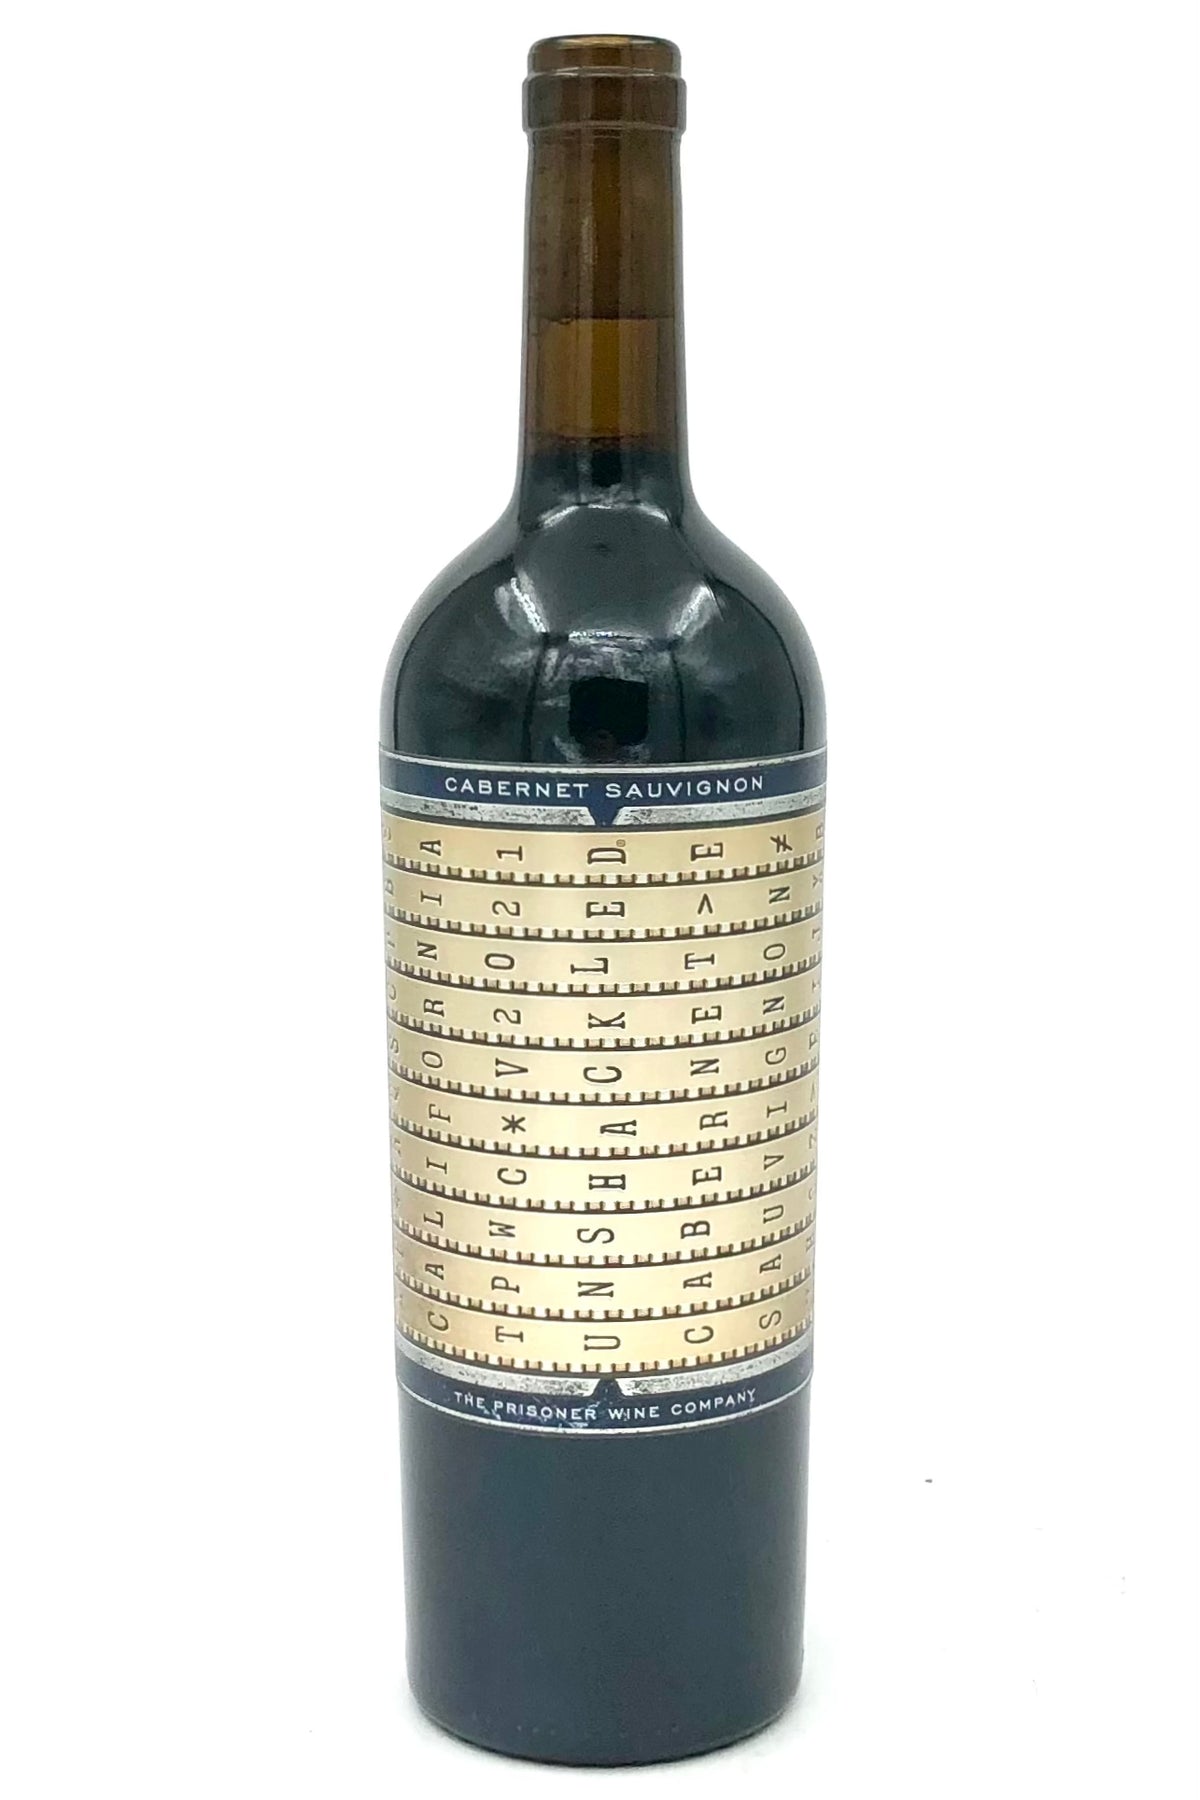 Unshackled 2021 Cabernet Sauvignon by The Prisoner Wine Company